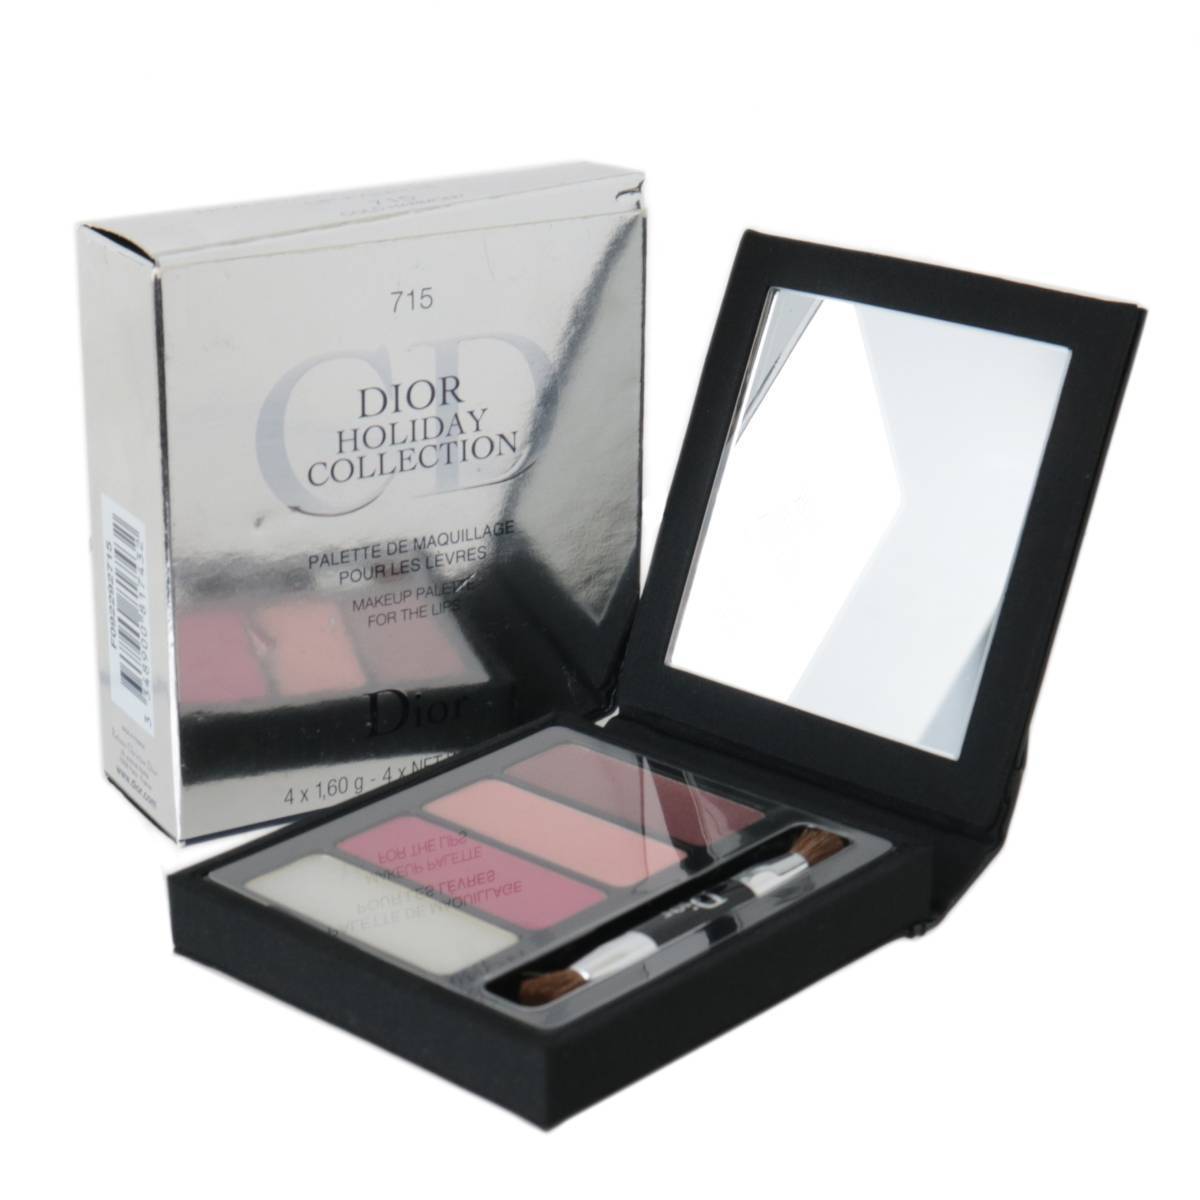 Christian Dior Christian Dior Hori tei collection lip make-up Palette lipstick #715 cold is - moni -1.6g×4